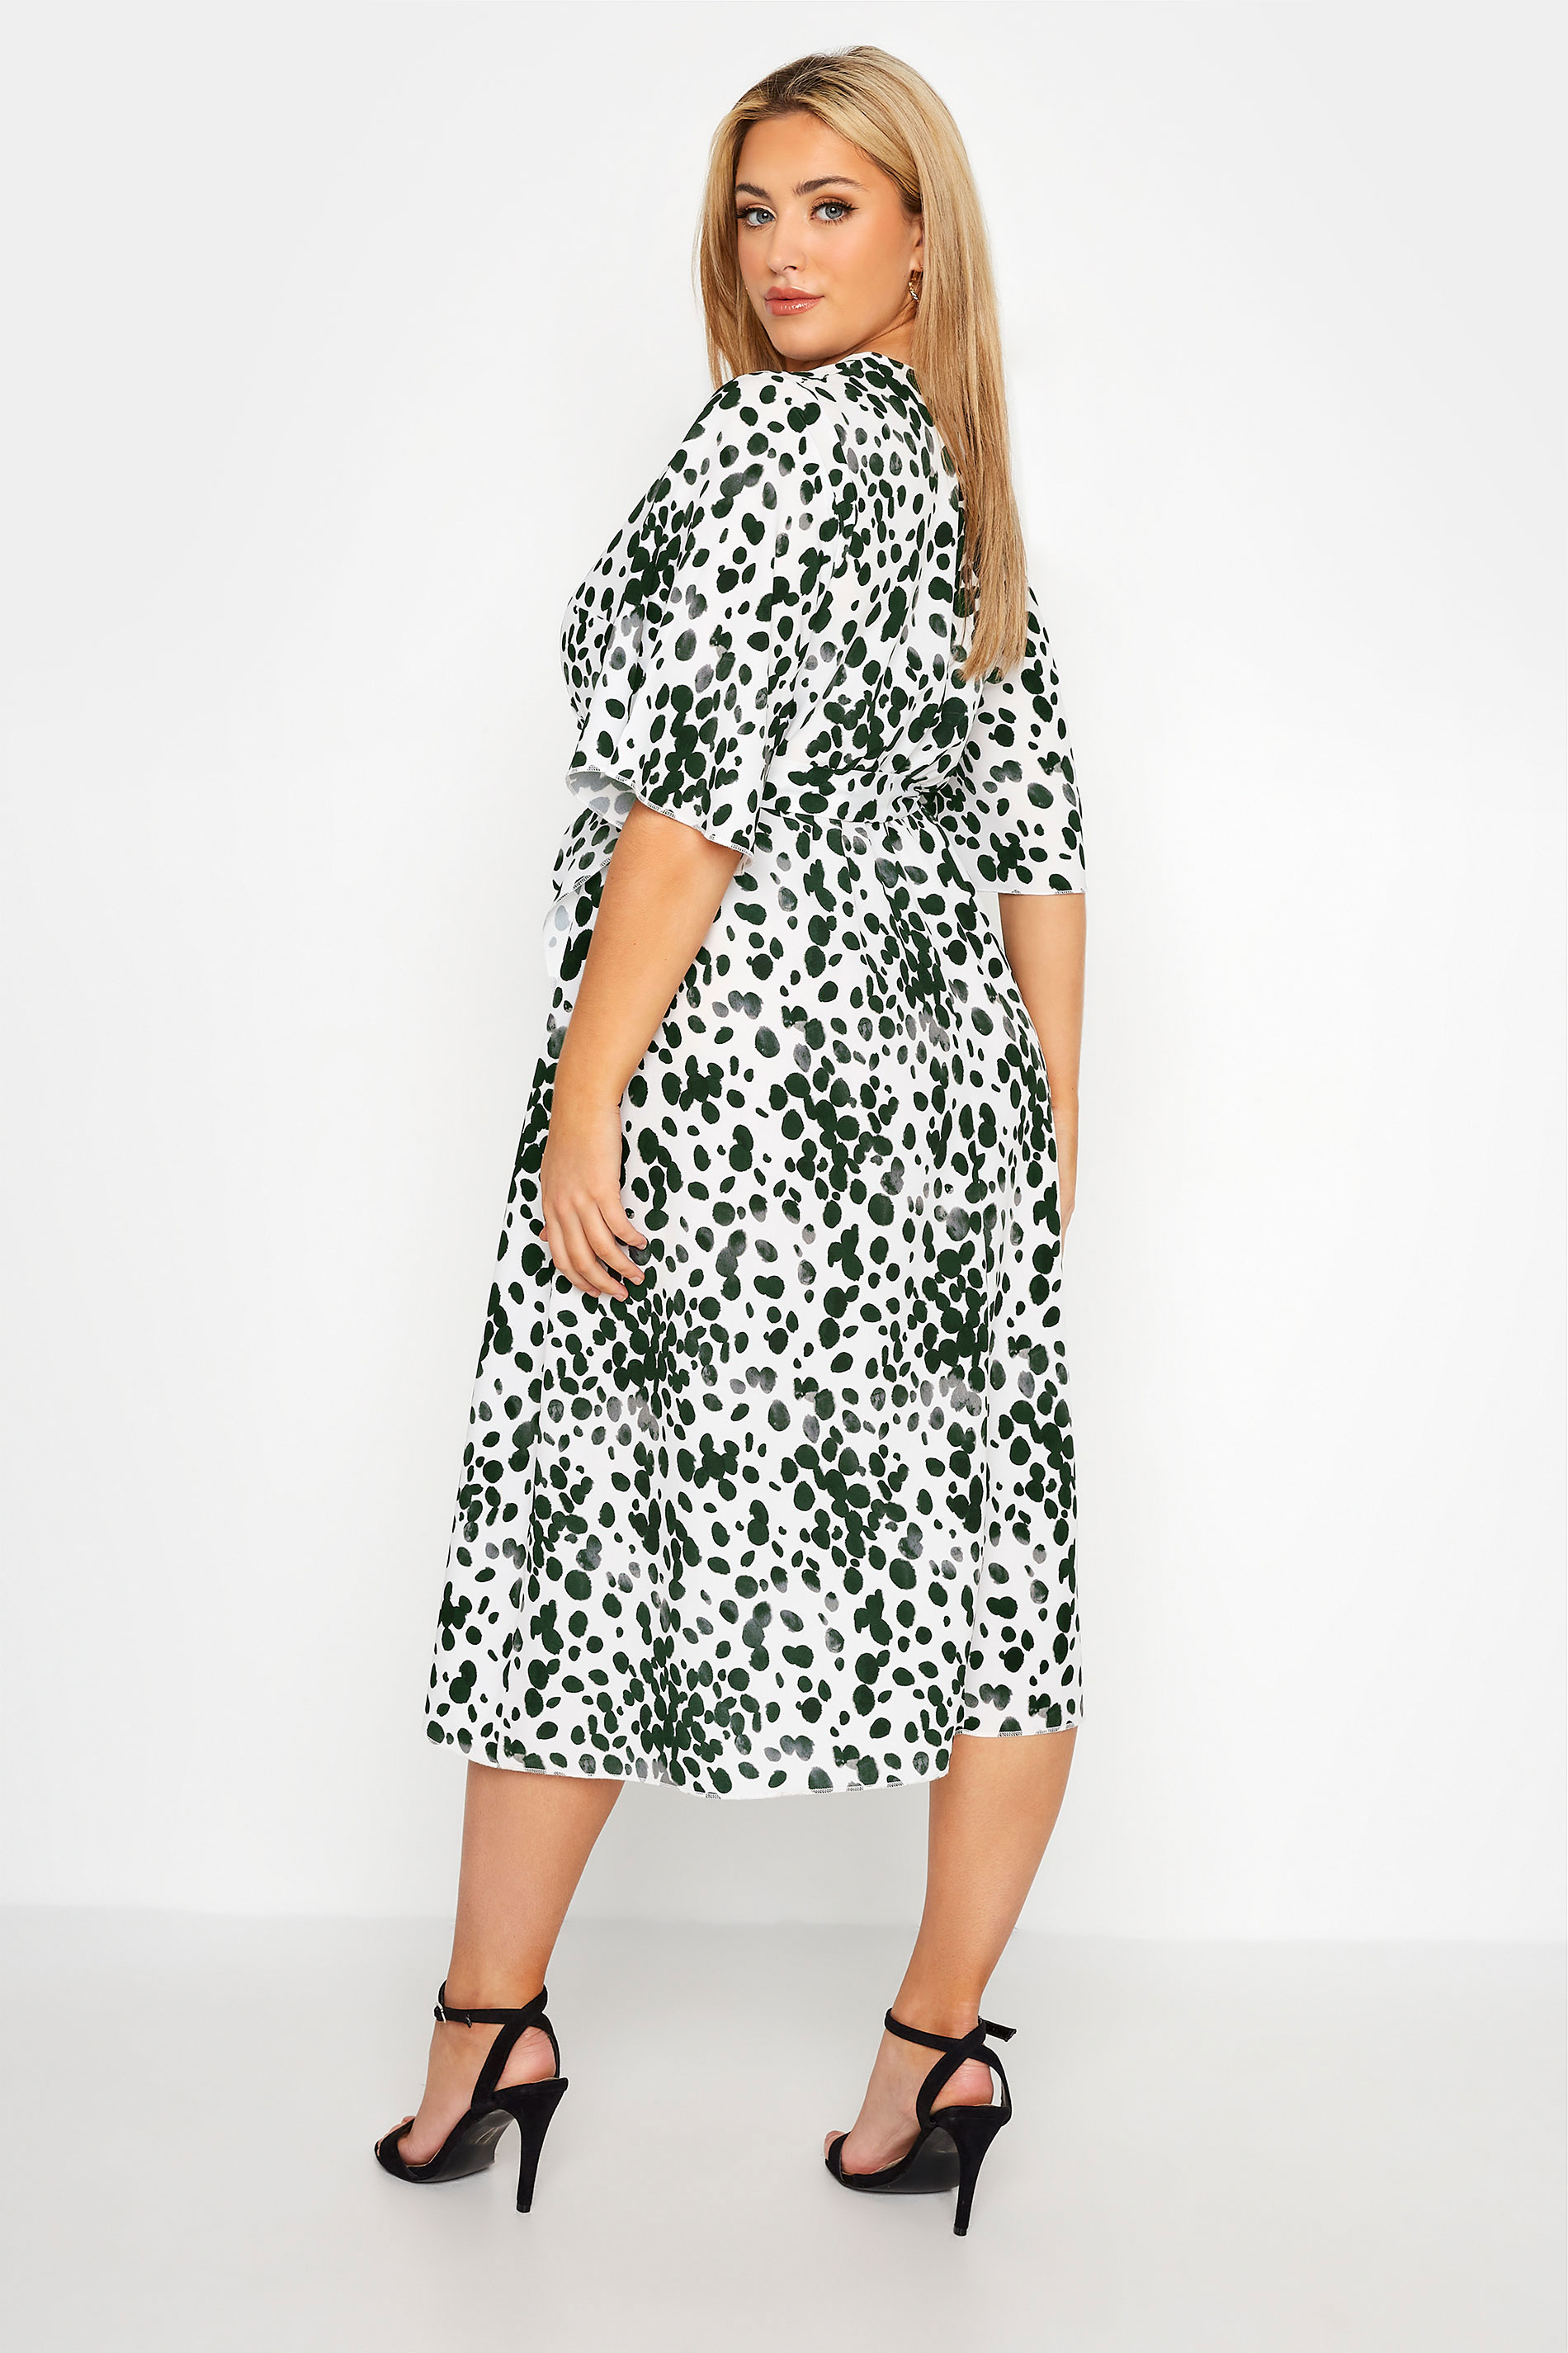 YOURS LONDON Plus Size White Dalmatian Print Wrap Dress | Yours Clothing 3